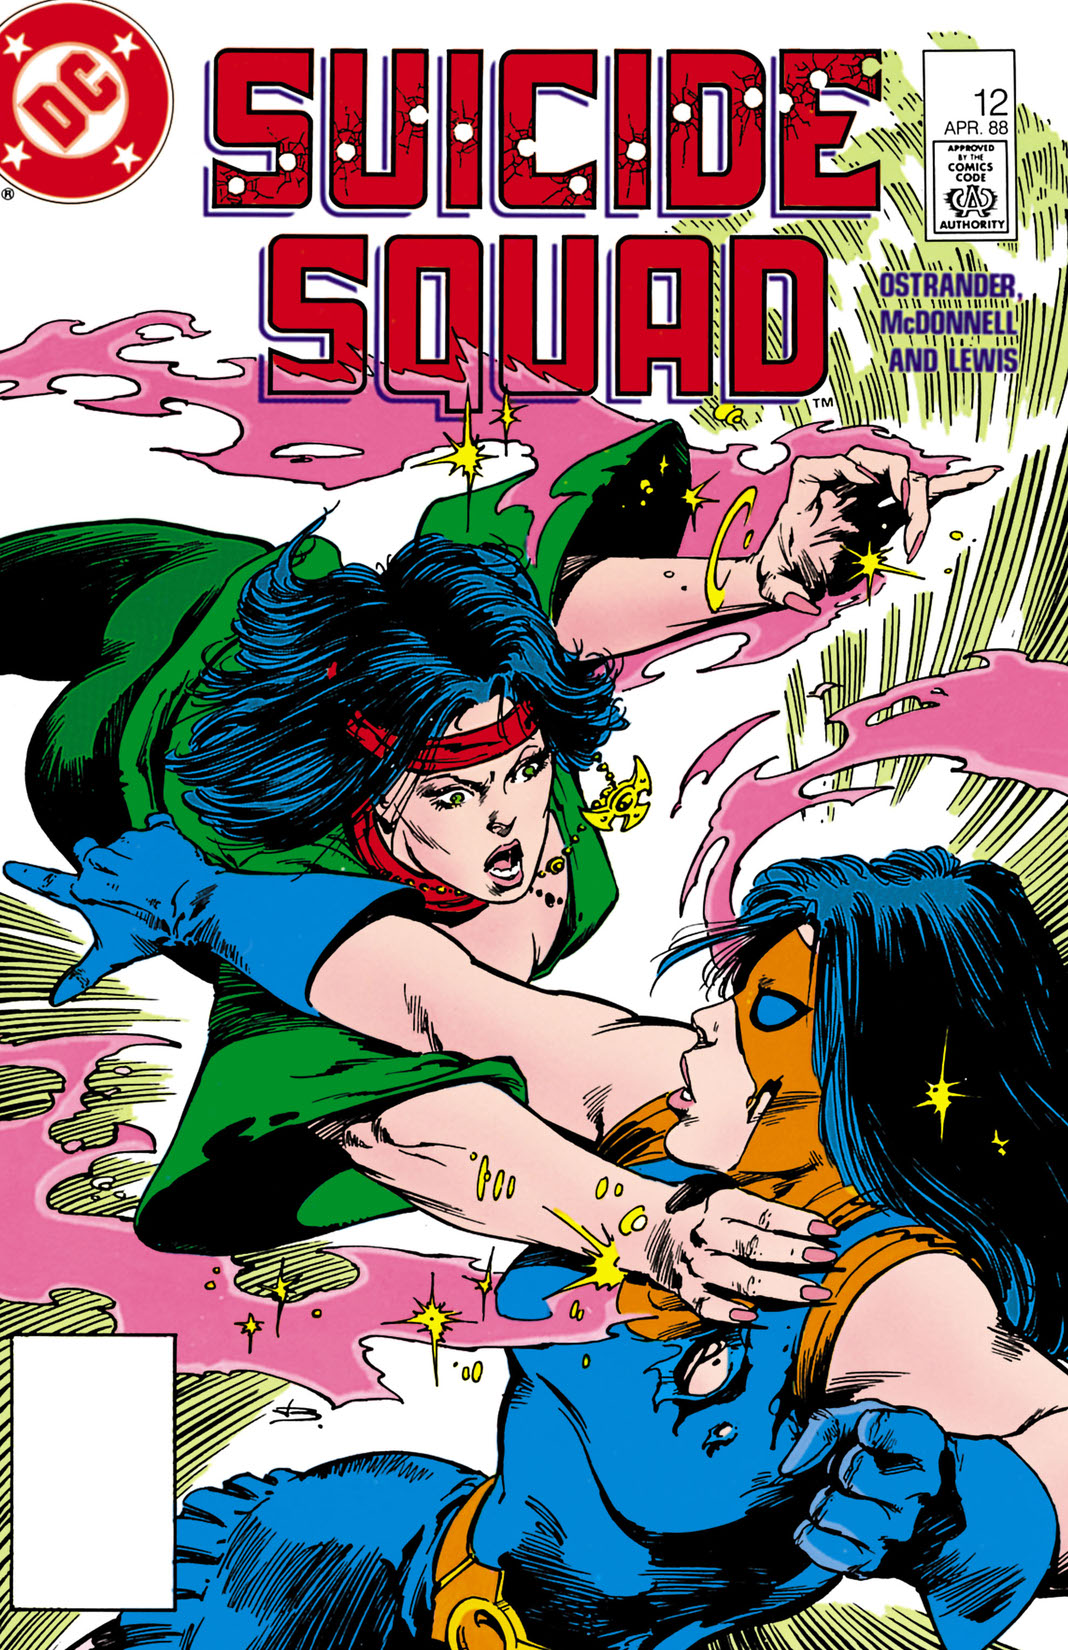 Suicide Squad (1987-) #12 preview images